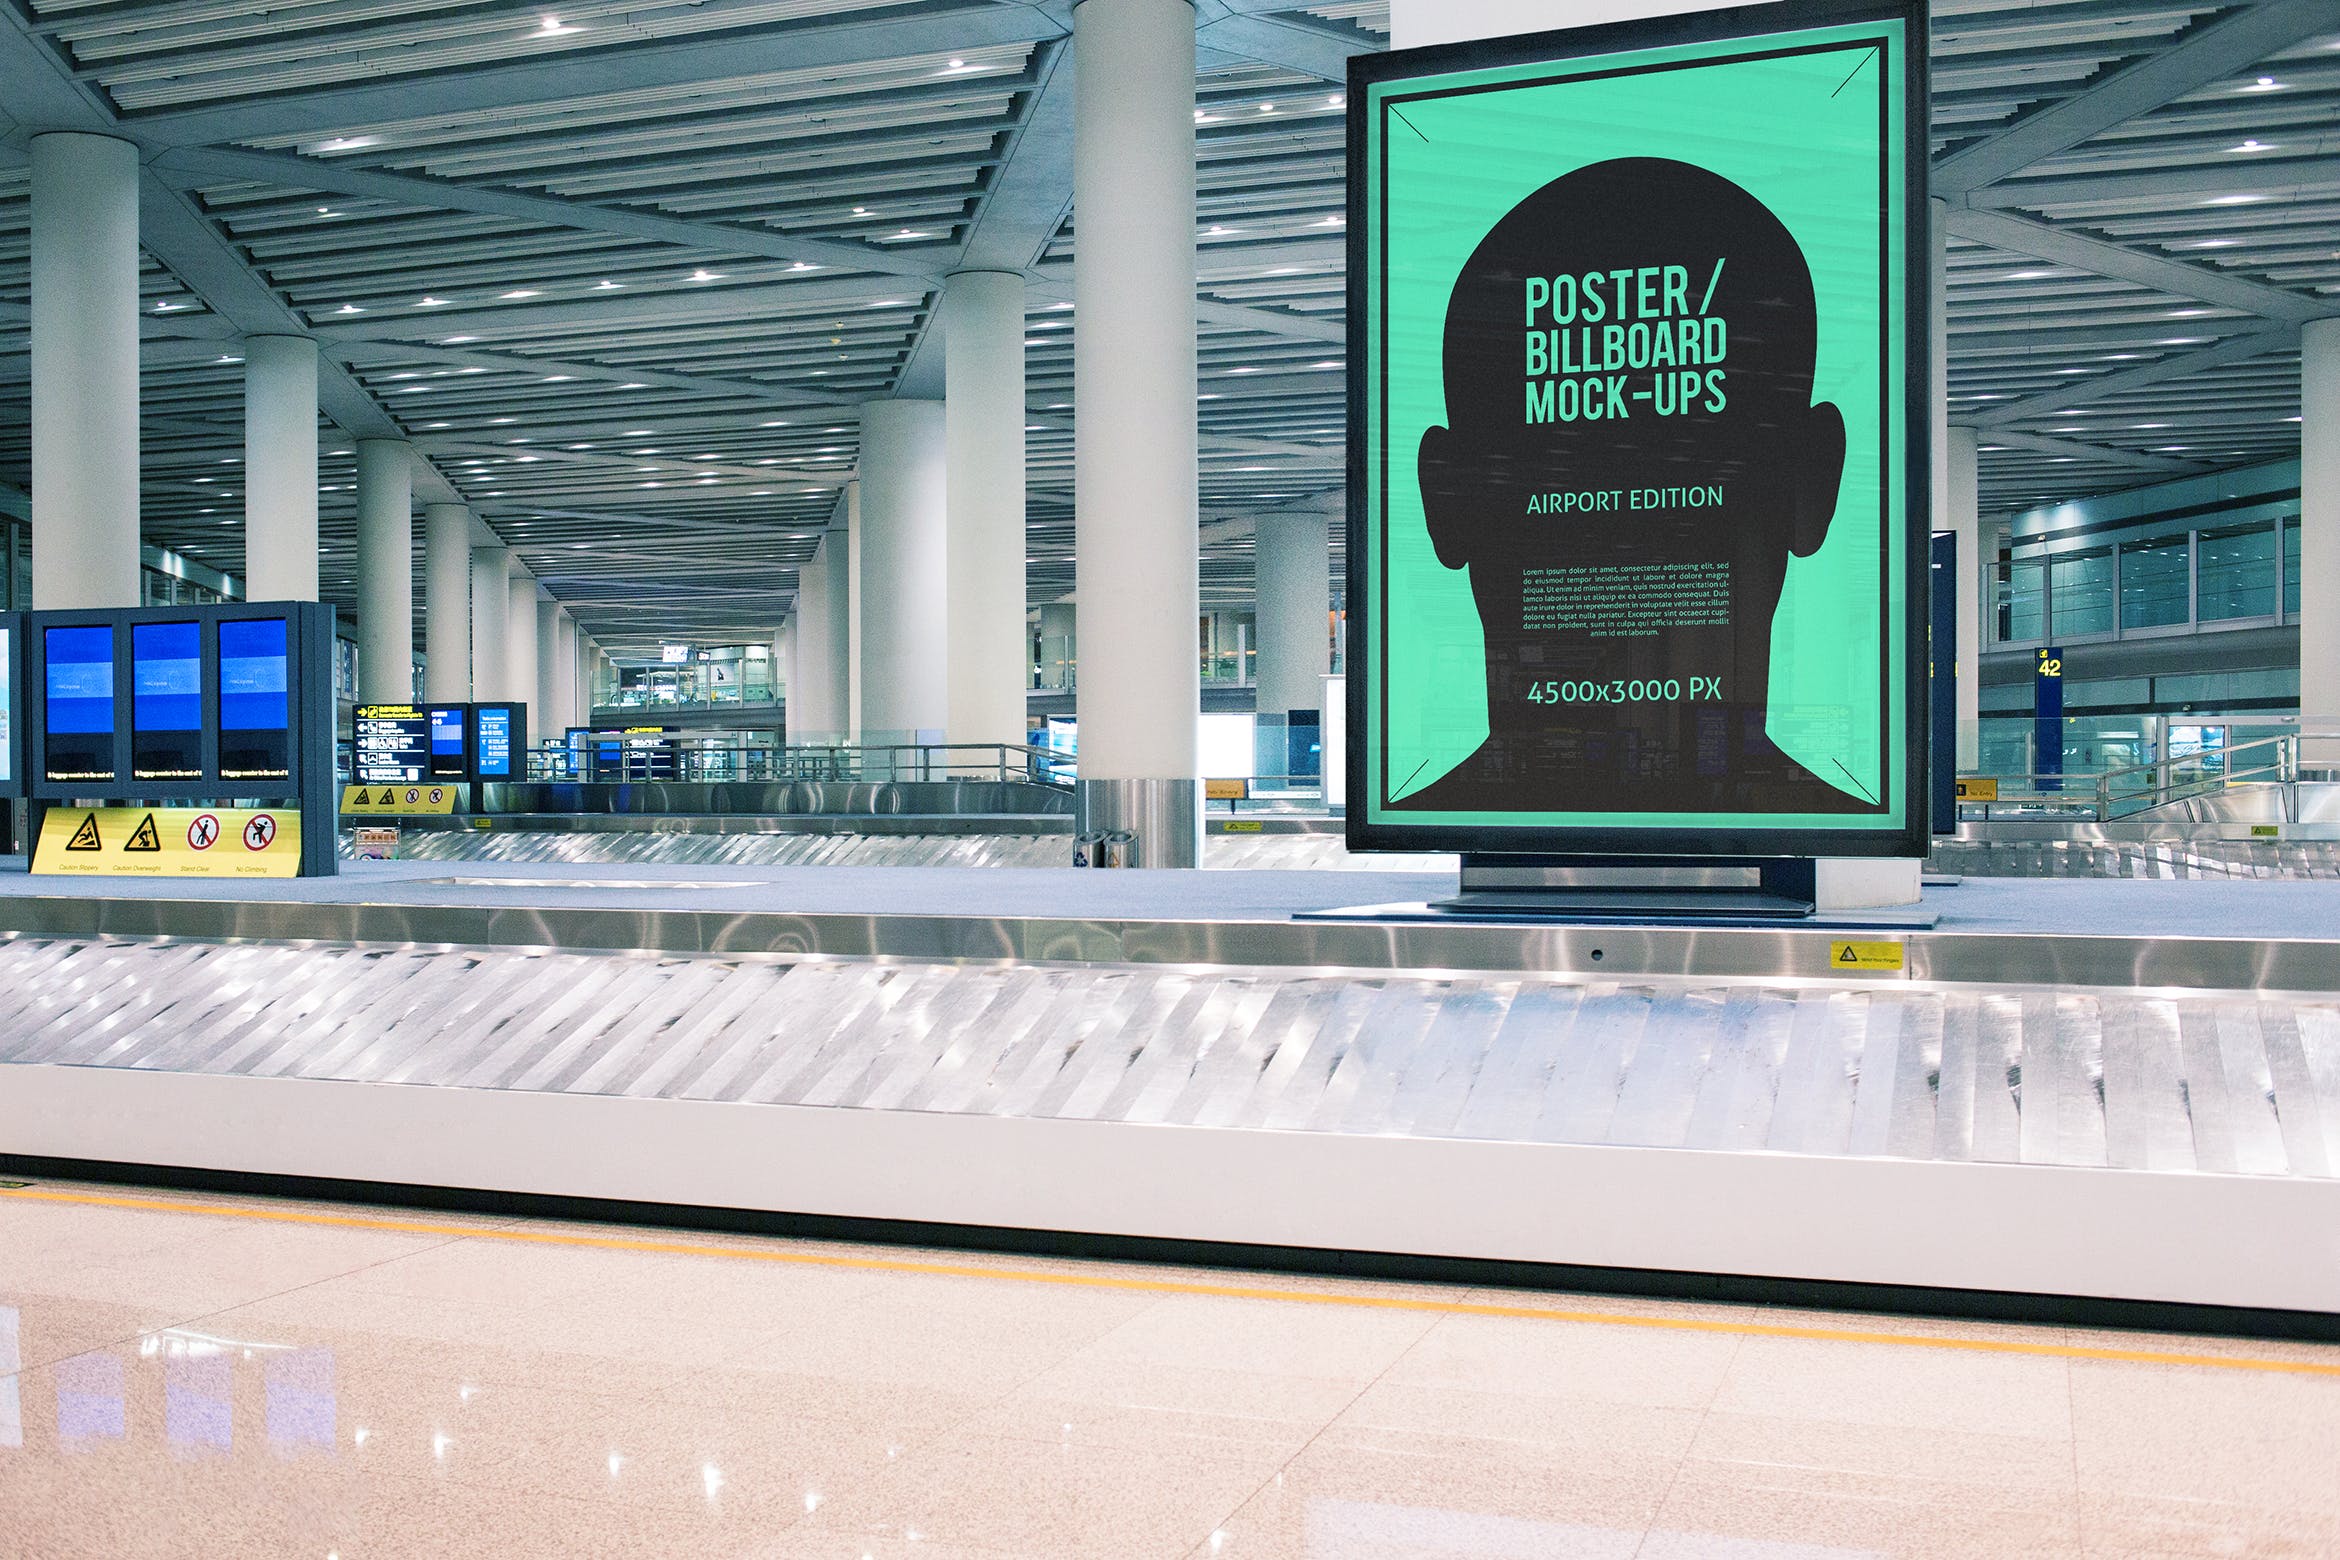 机场候机室海报/广告牌样机16图库精选模板#8 Poster / Billboard Mock-ups – Airport Edition #8插图